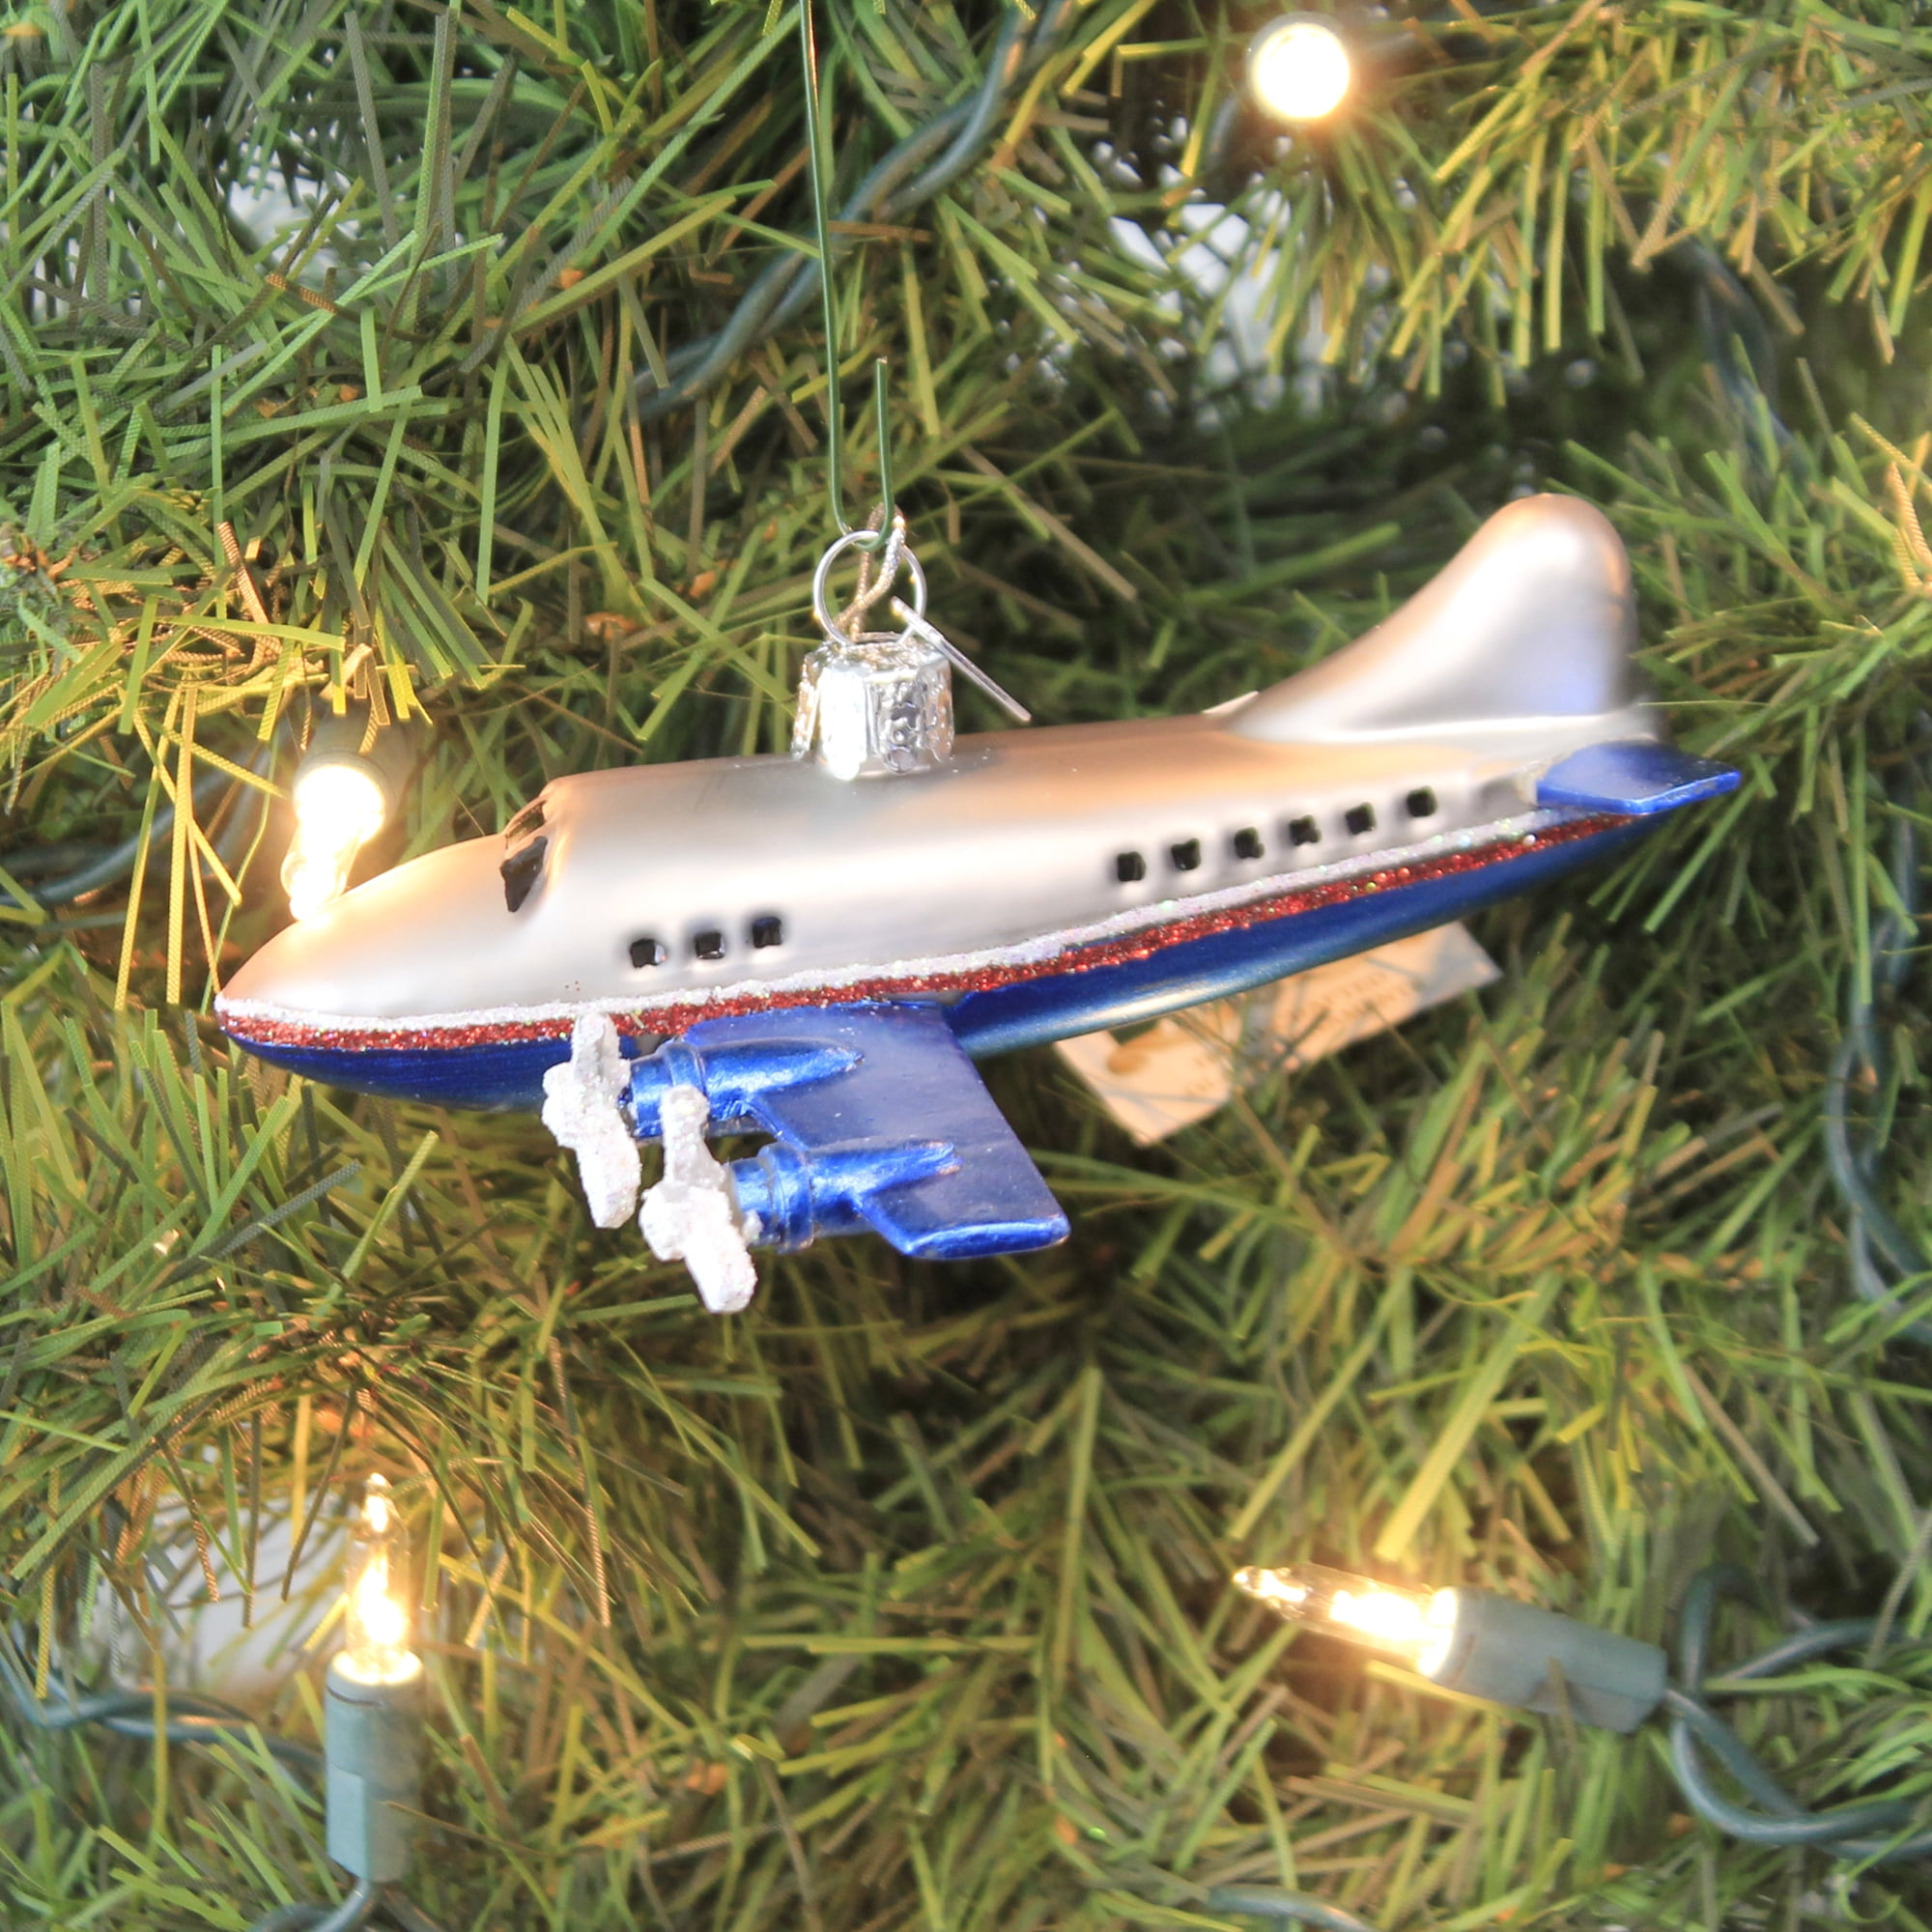 NB1069 Noble Gems 4.5." Travel Globe W/ Airplane Glass Christmas Ornament